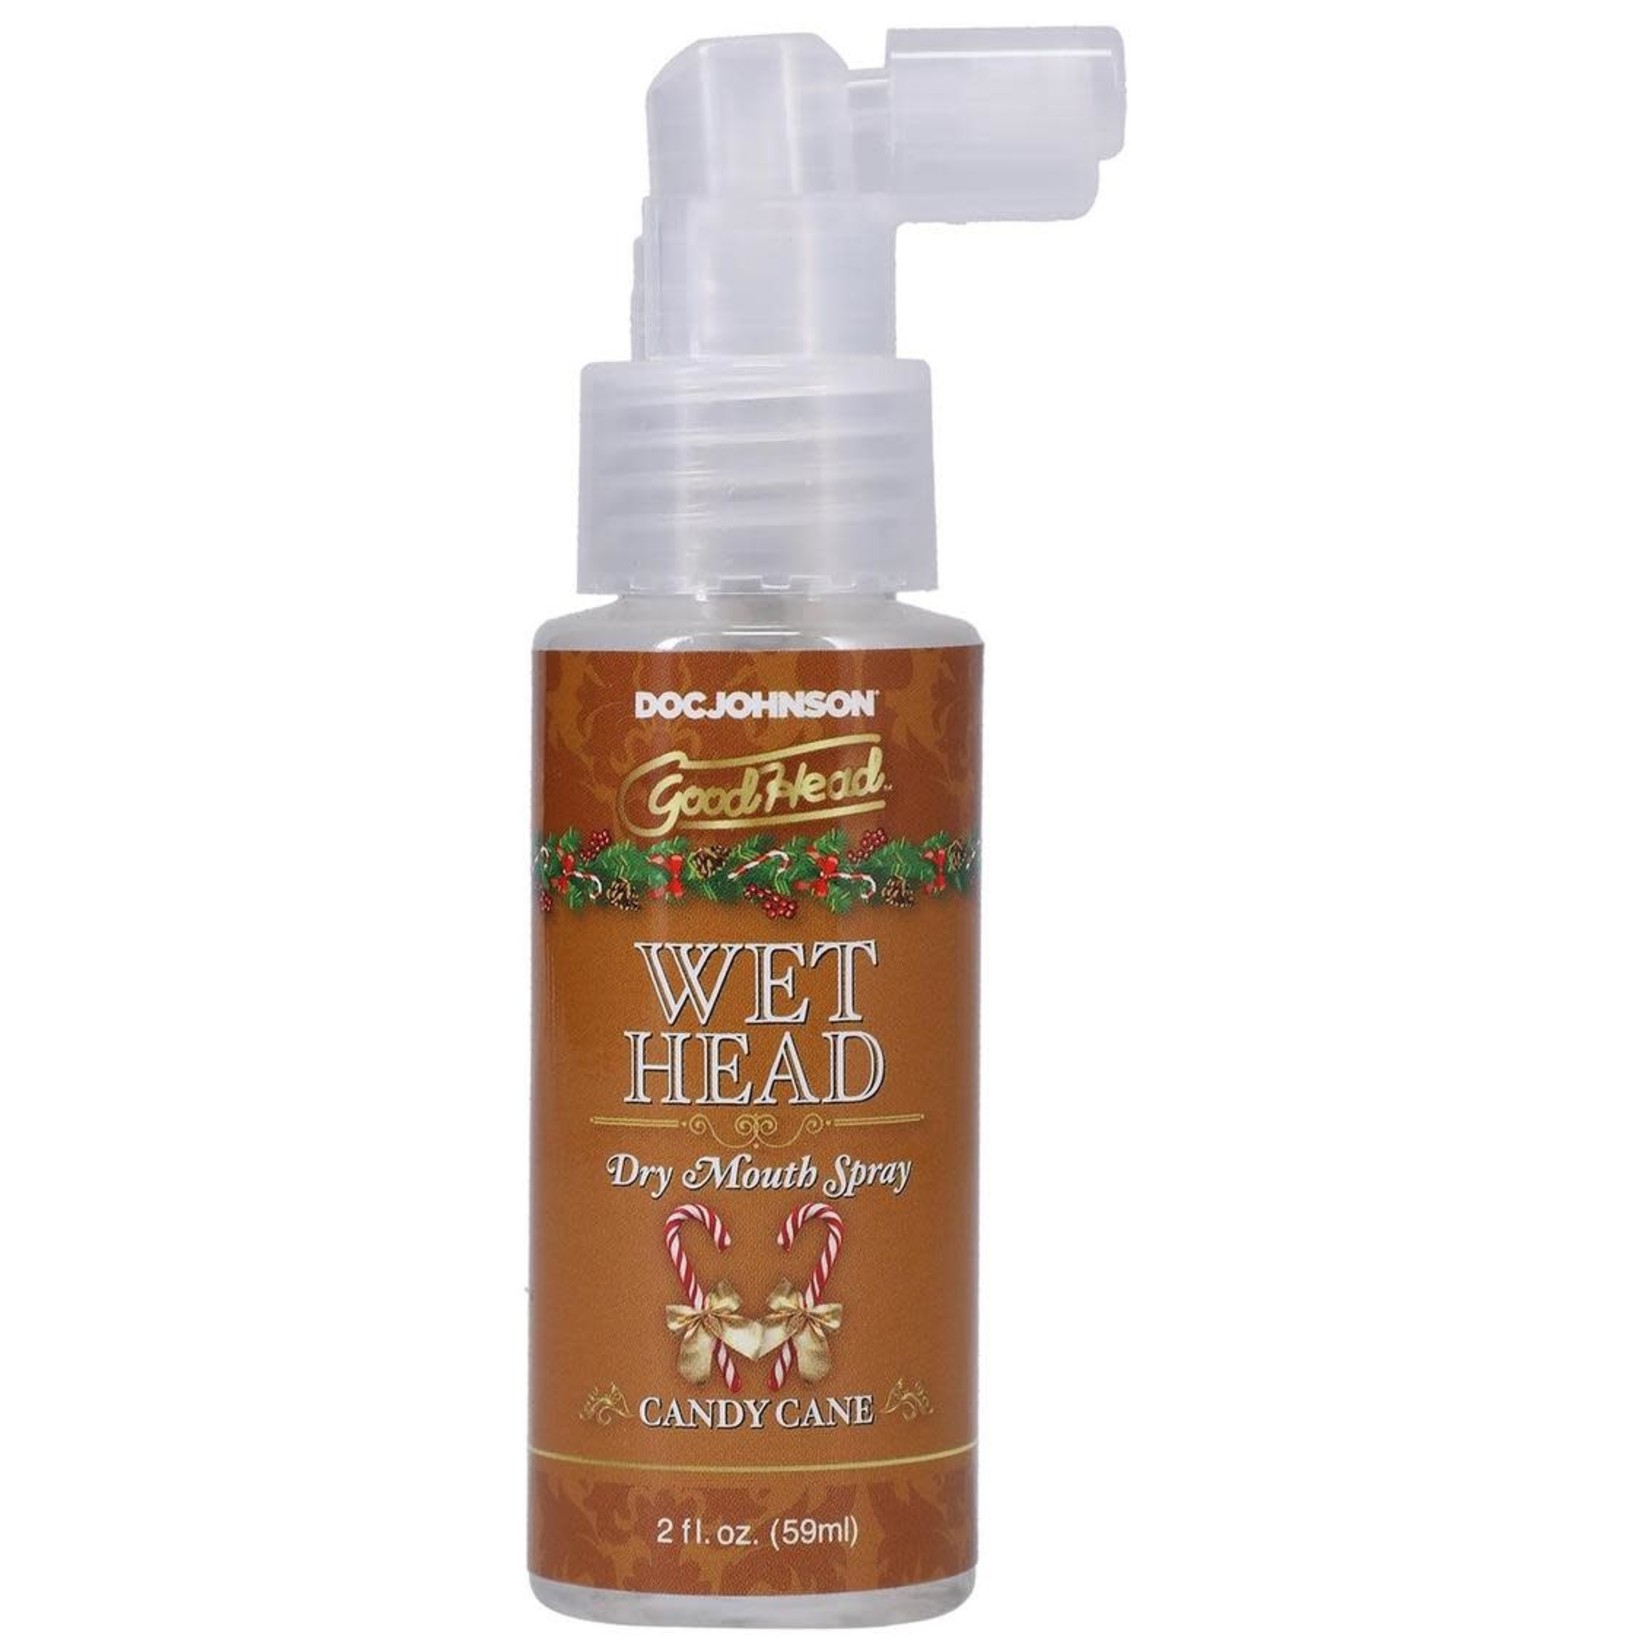 GoodHead Holiday Wet Head Dry Mouth Spray 2oz - Candy Cane